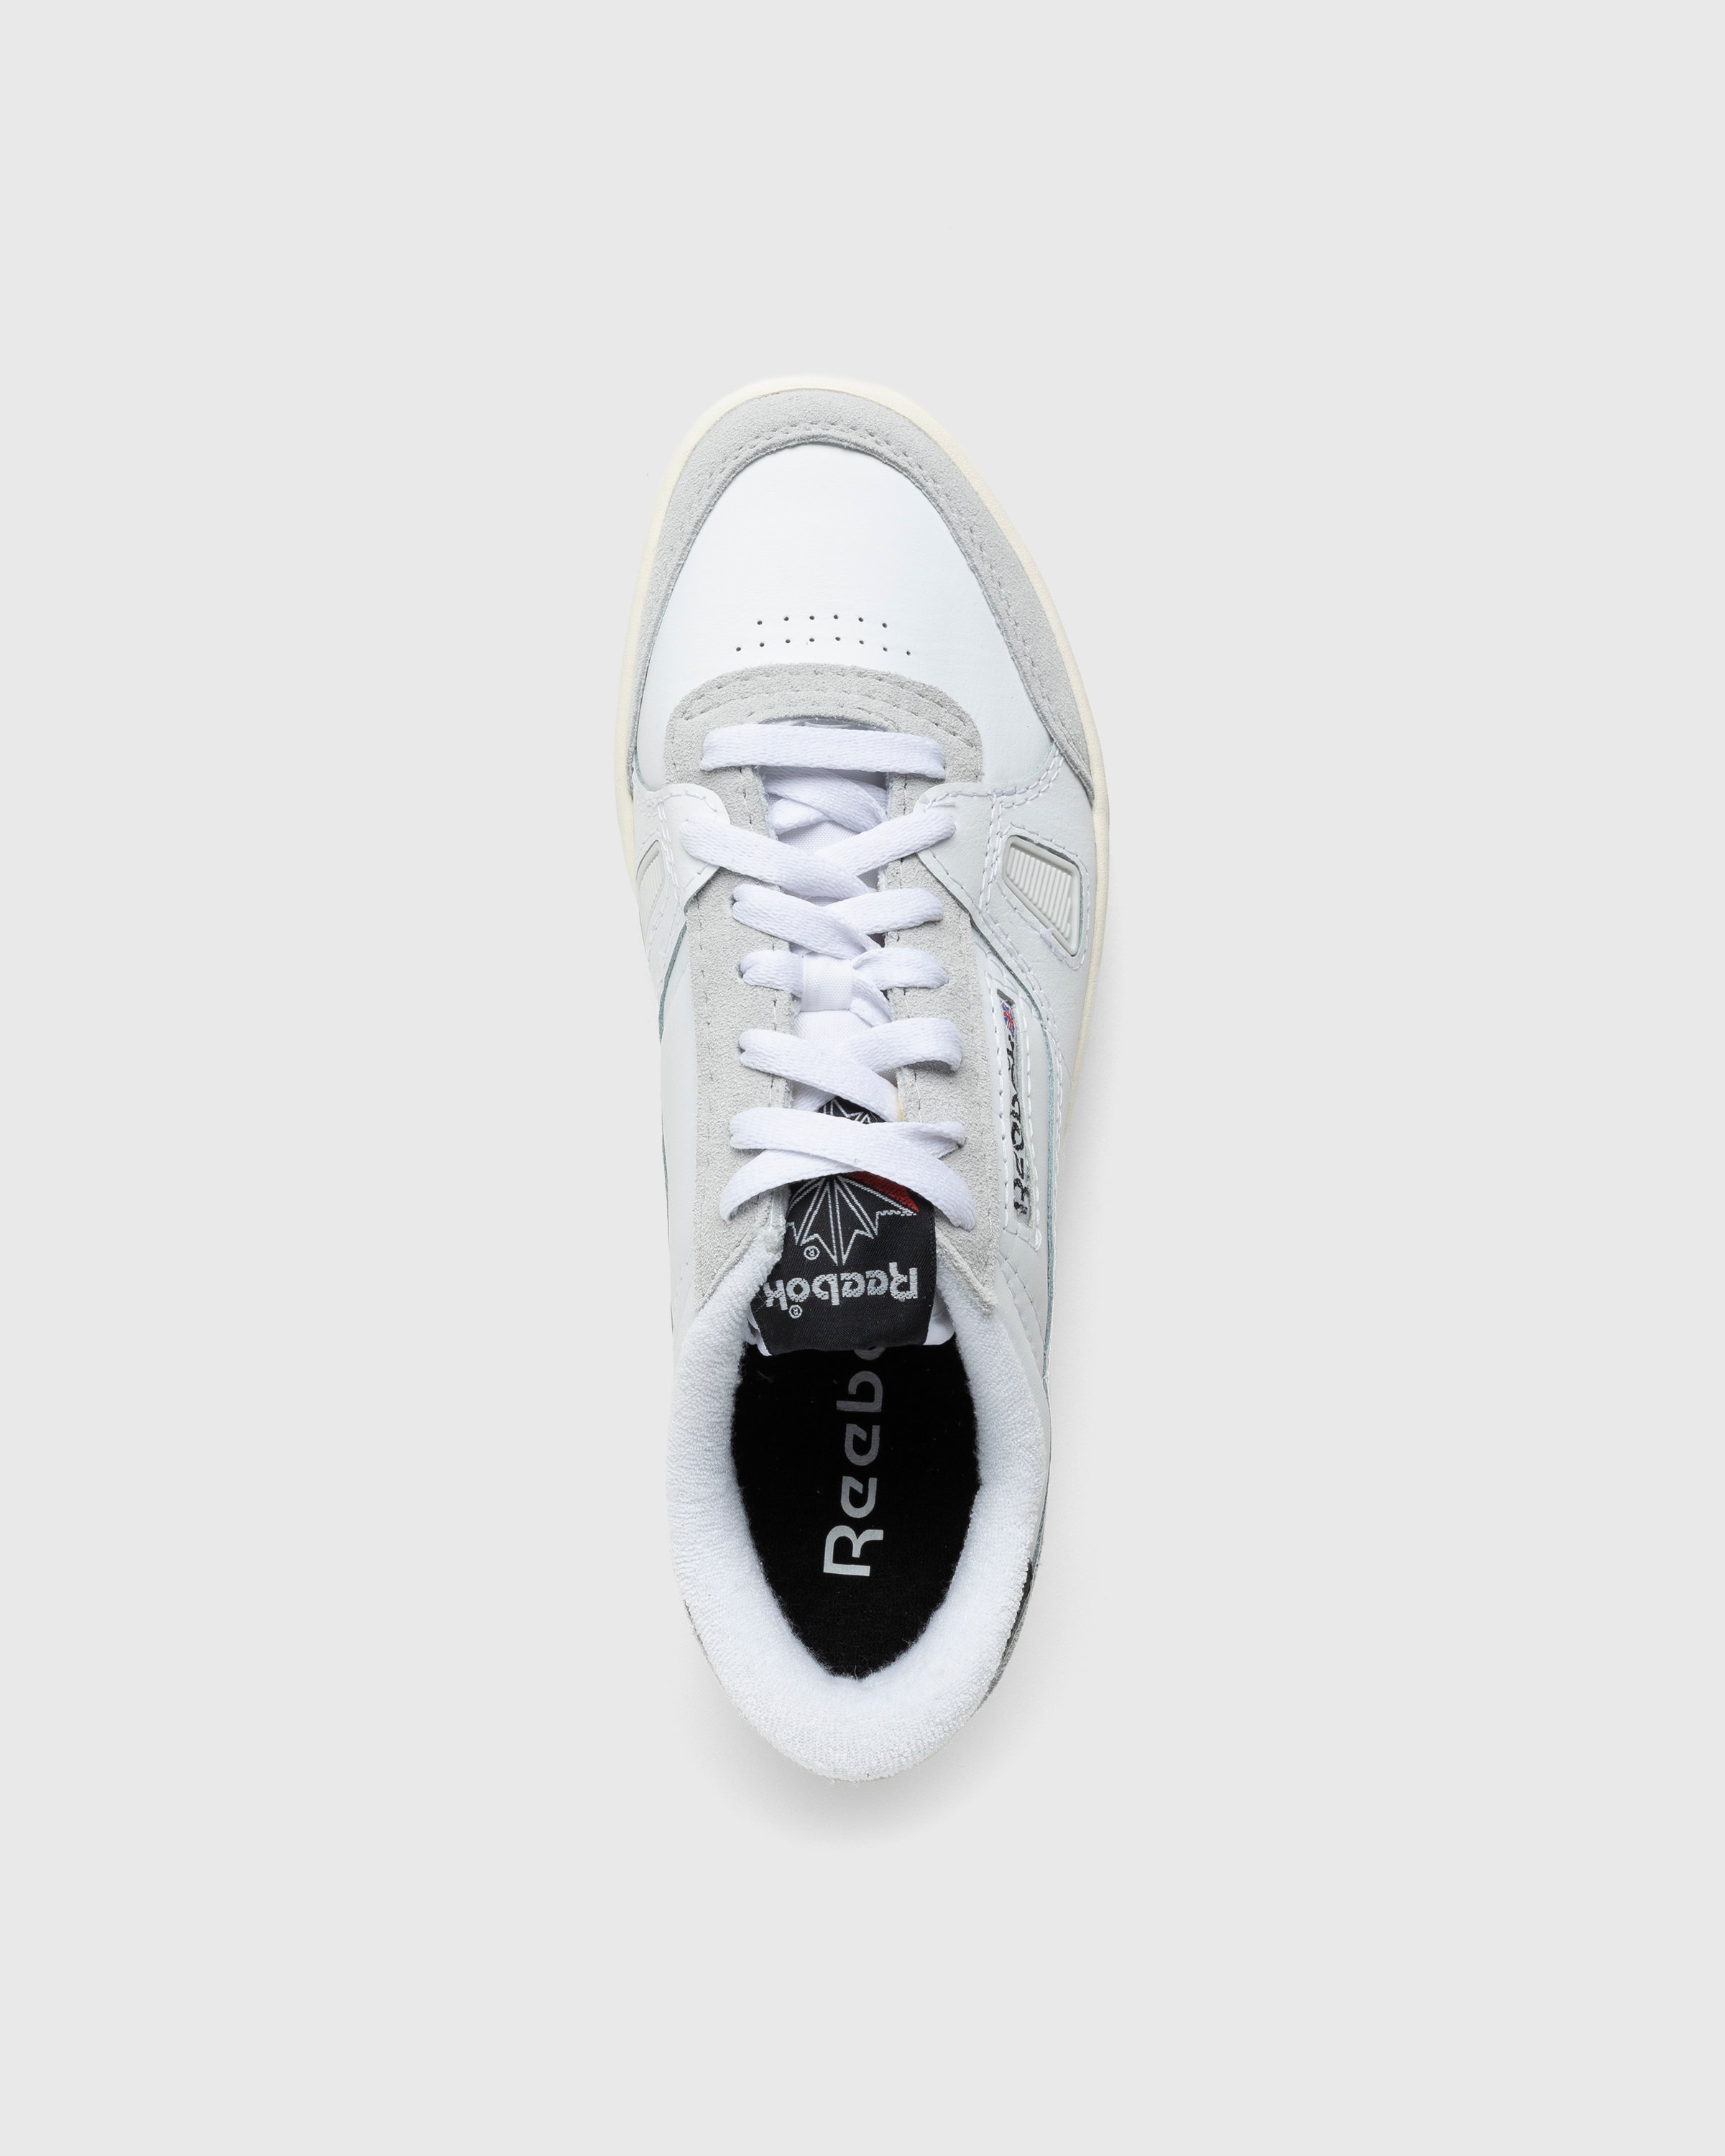 Reebok - LT Court - Footwear - White - Image 5